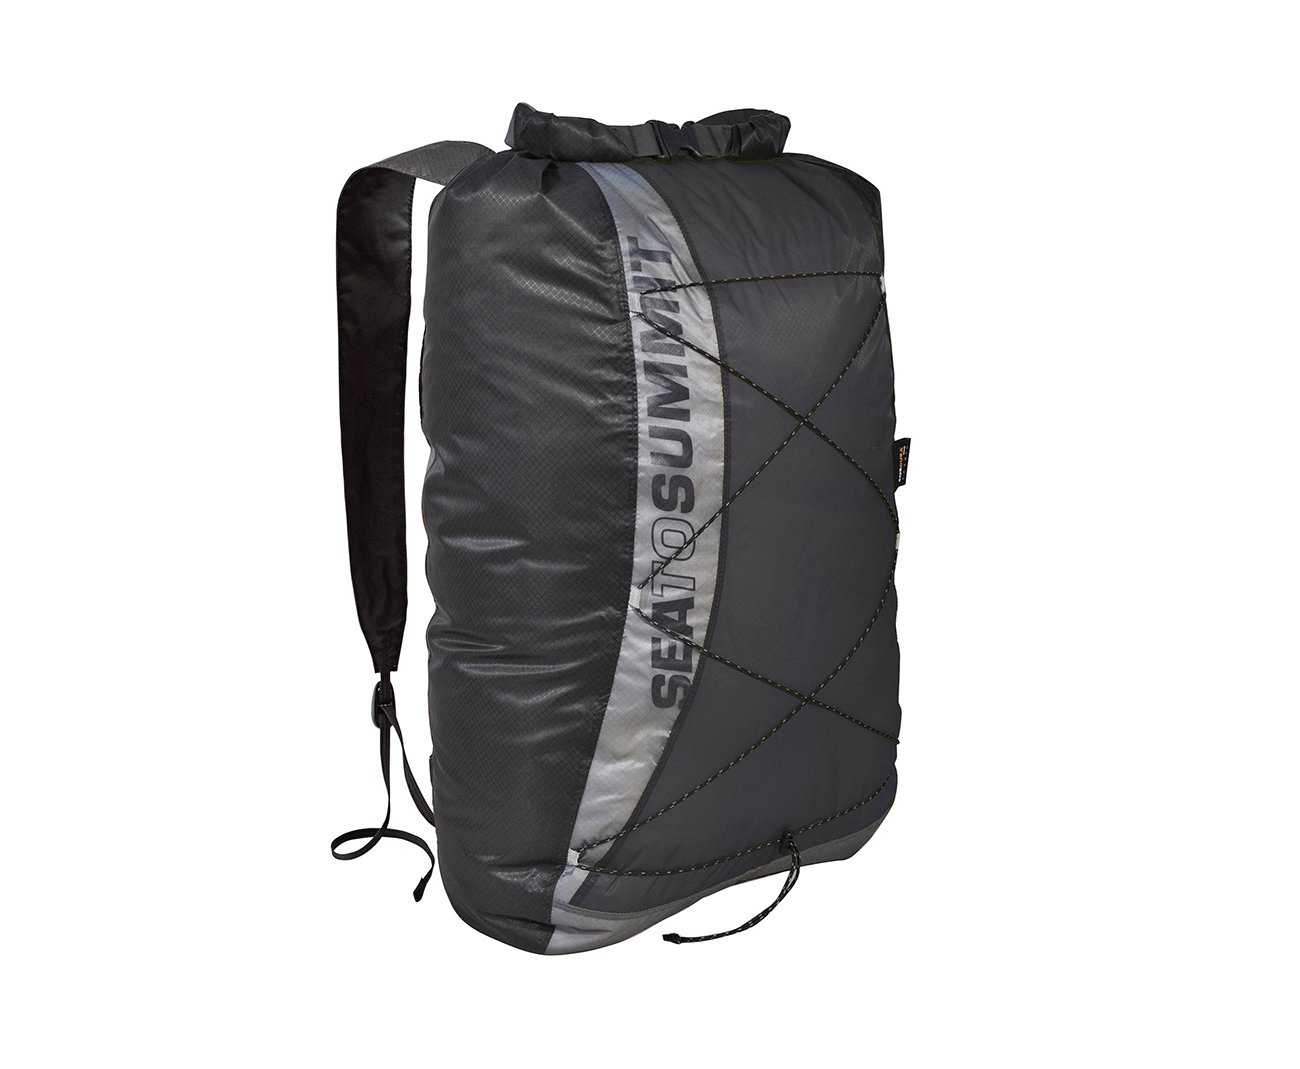 Mochila Sprint Waterproof Drypack 20 Litros Preto - Sea To Summit